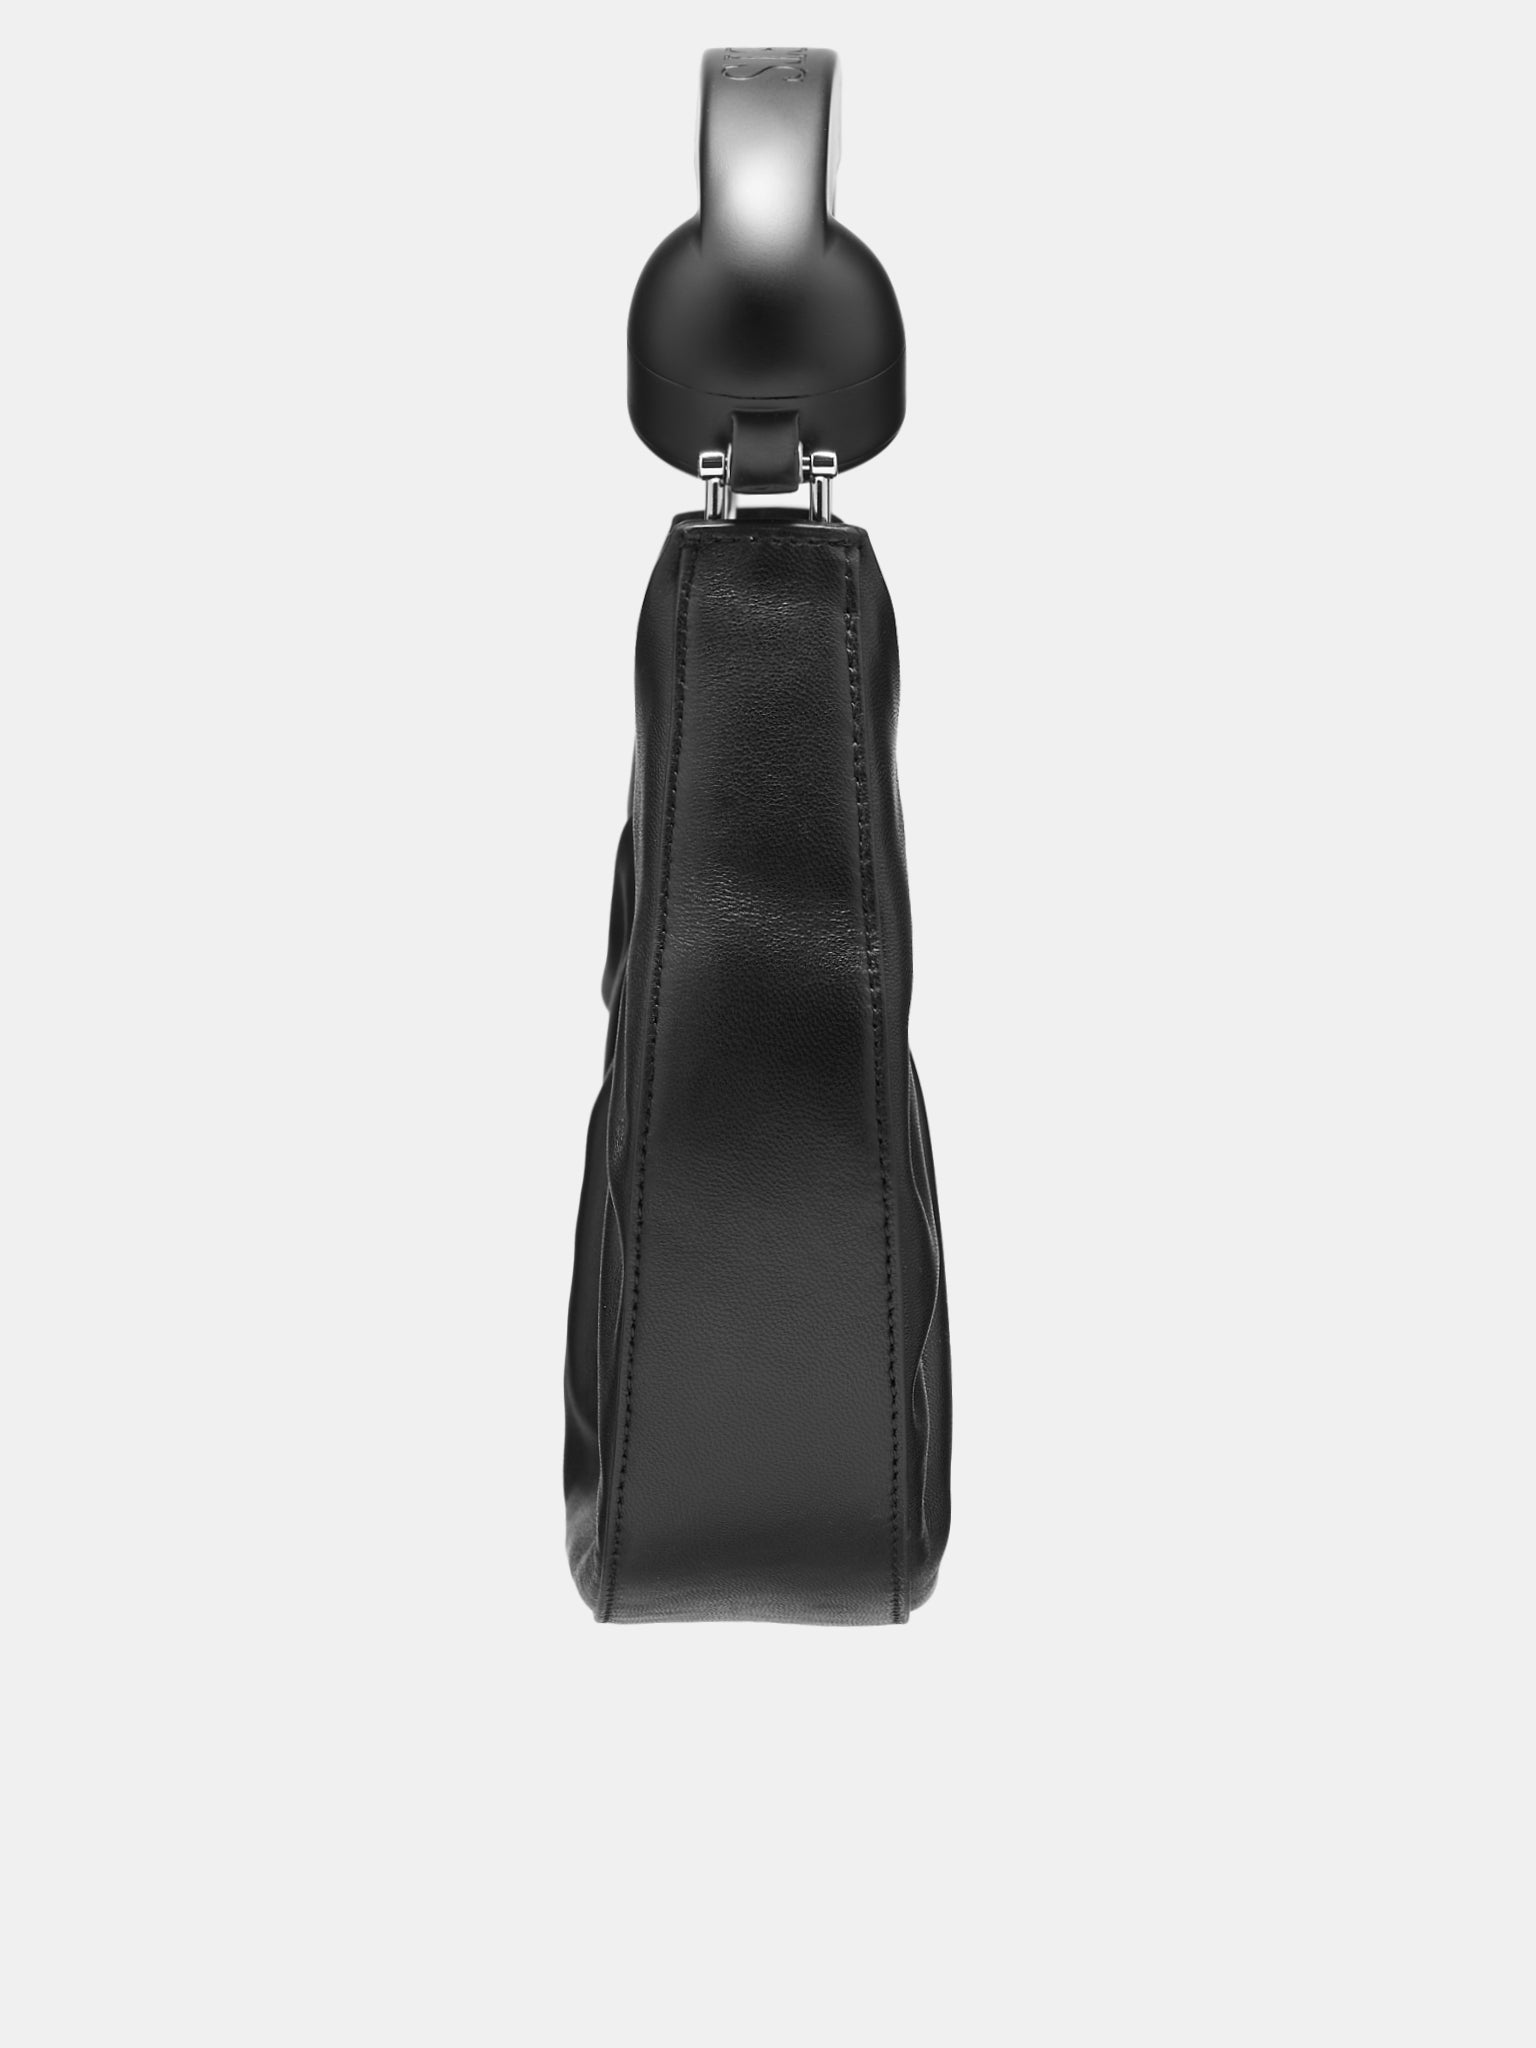 Leather Phone Hobo Bag (BL004-001-BLACK)